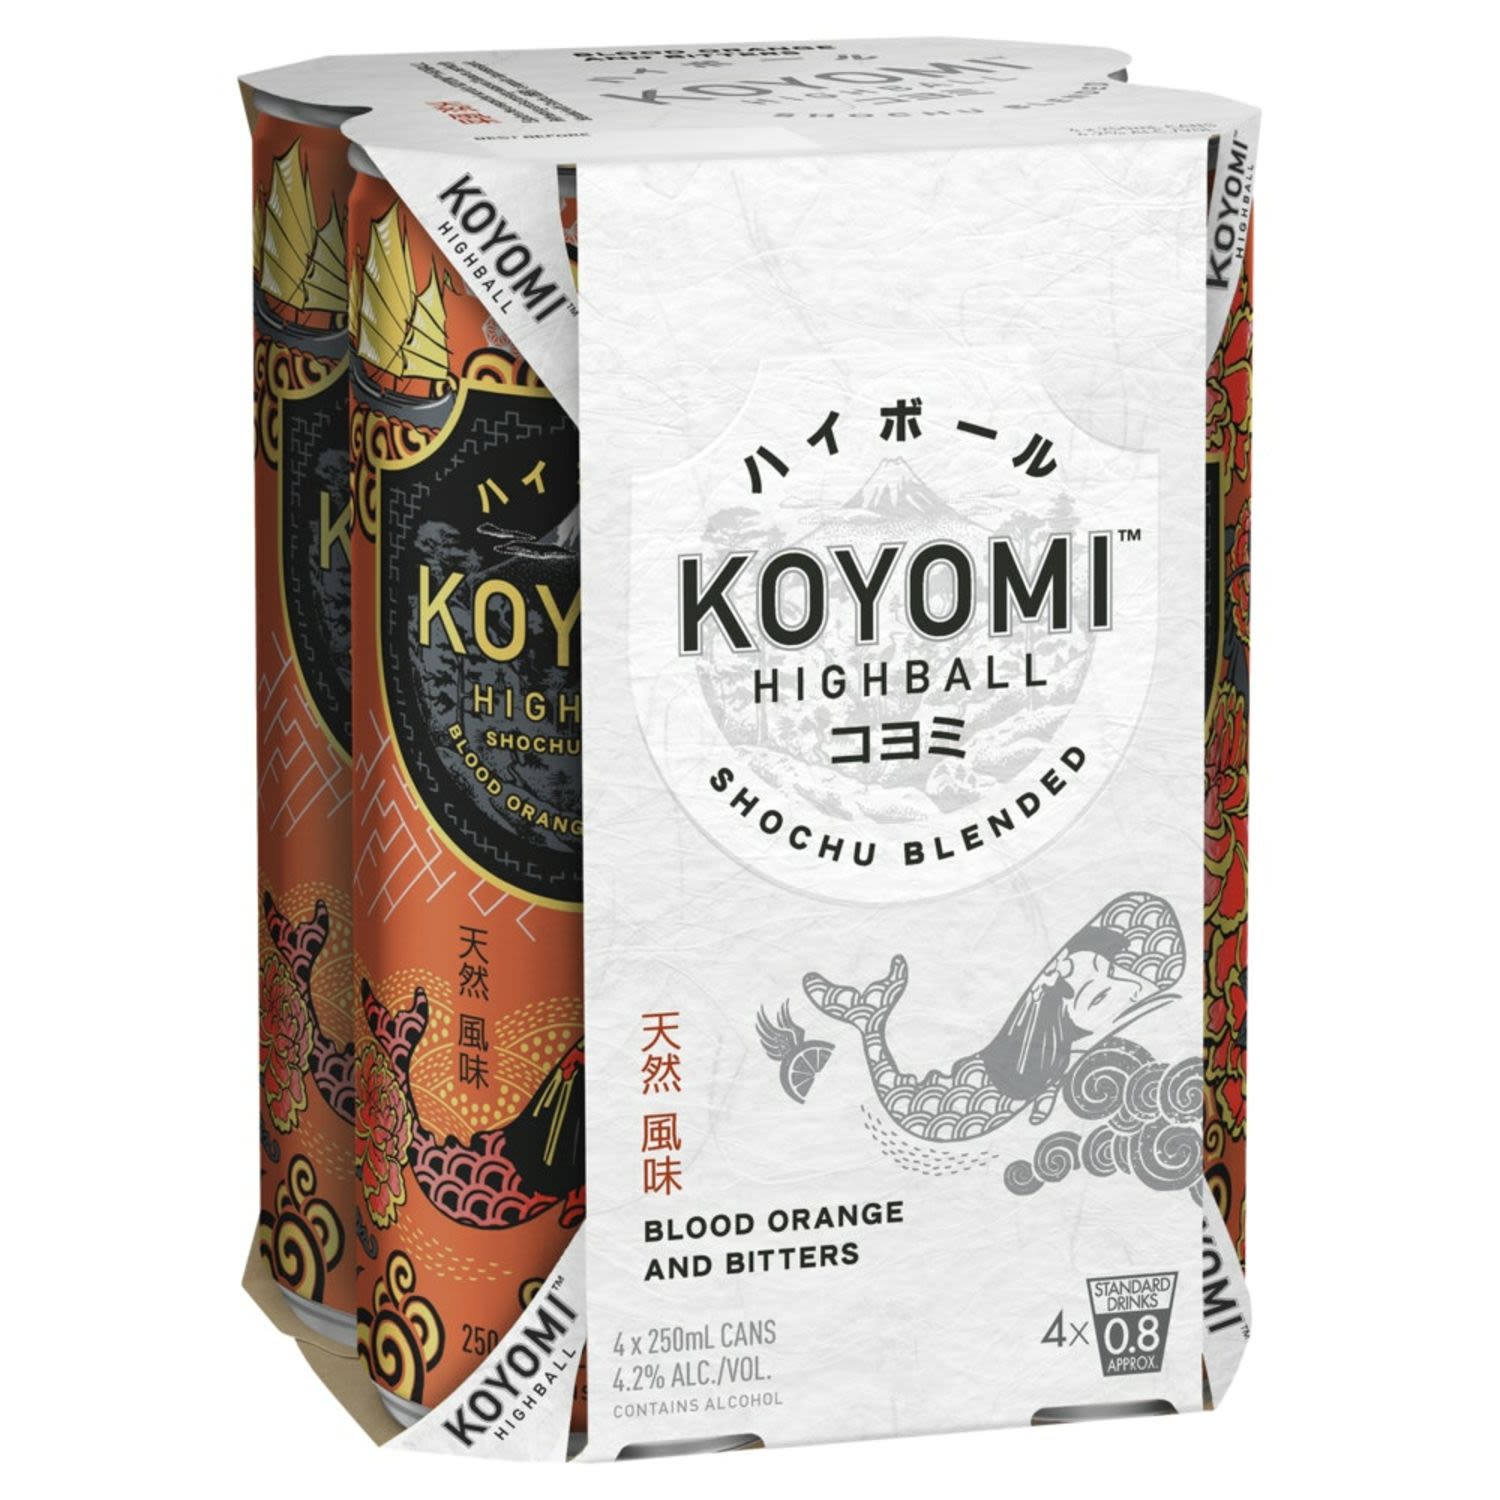 Koyomi Shochu Blood Orange and Bitters Highball 250mL<br /> <br />Alcohol Volume: 4.20%<br /><br />Pack Format: 4 Pack<br /><br />Standard Drinks: 0.8</br /><br />Pack Type: Can<br />